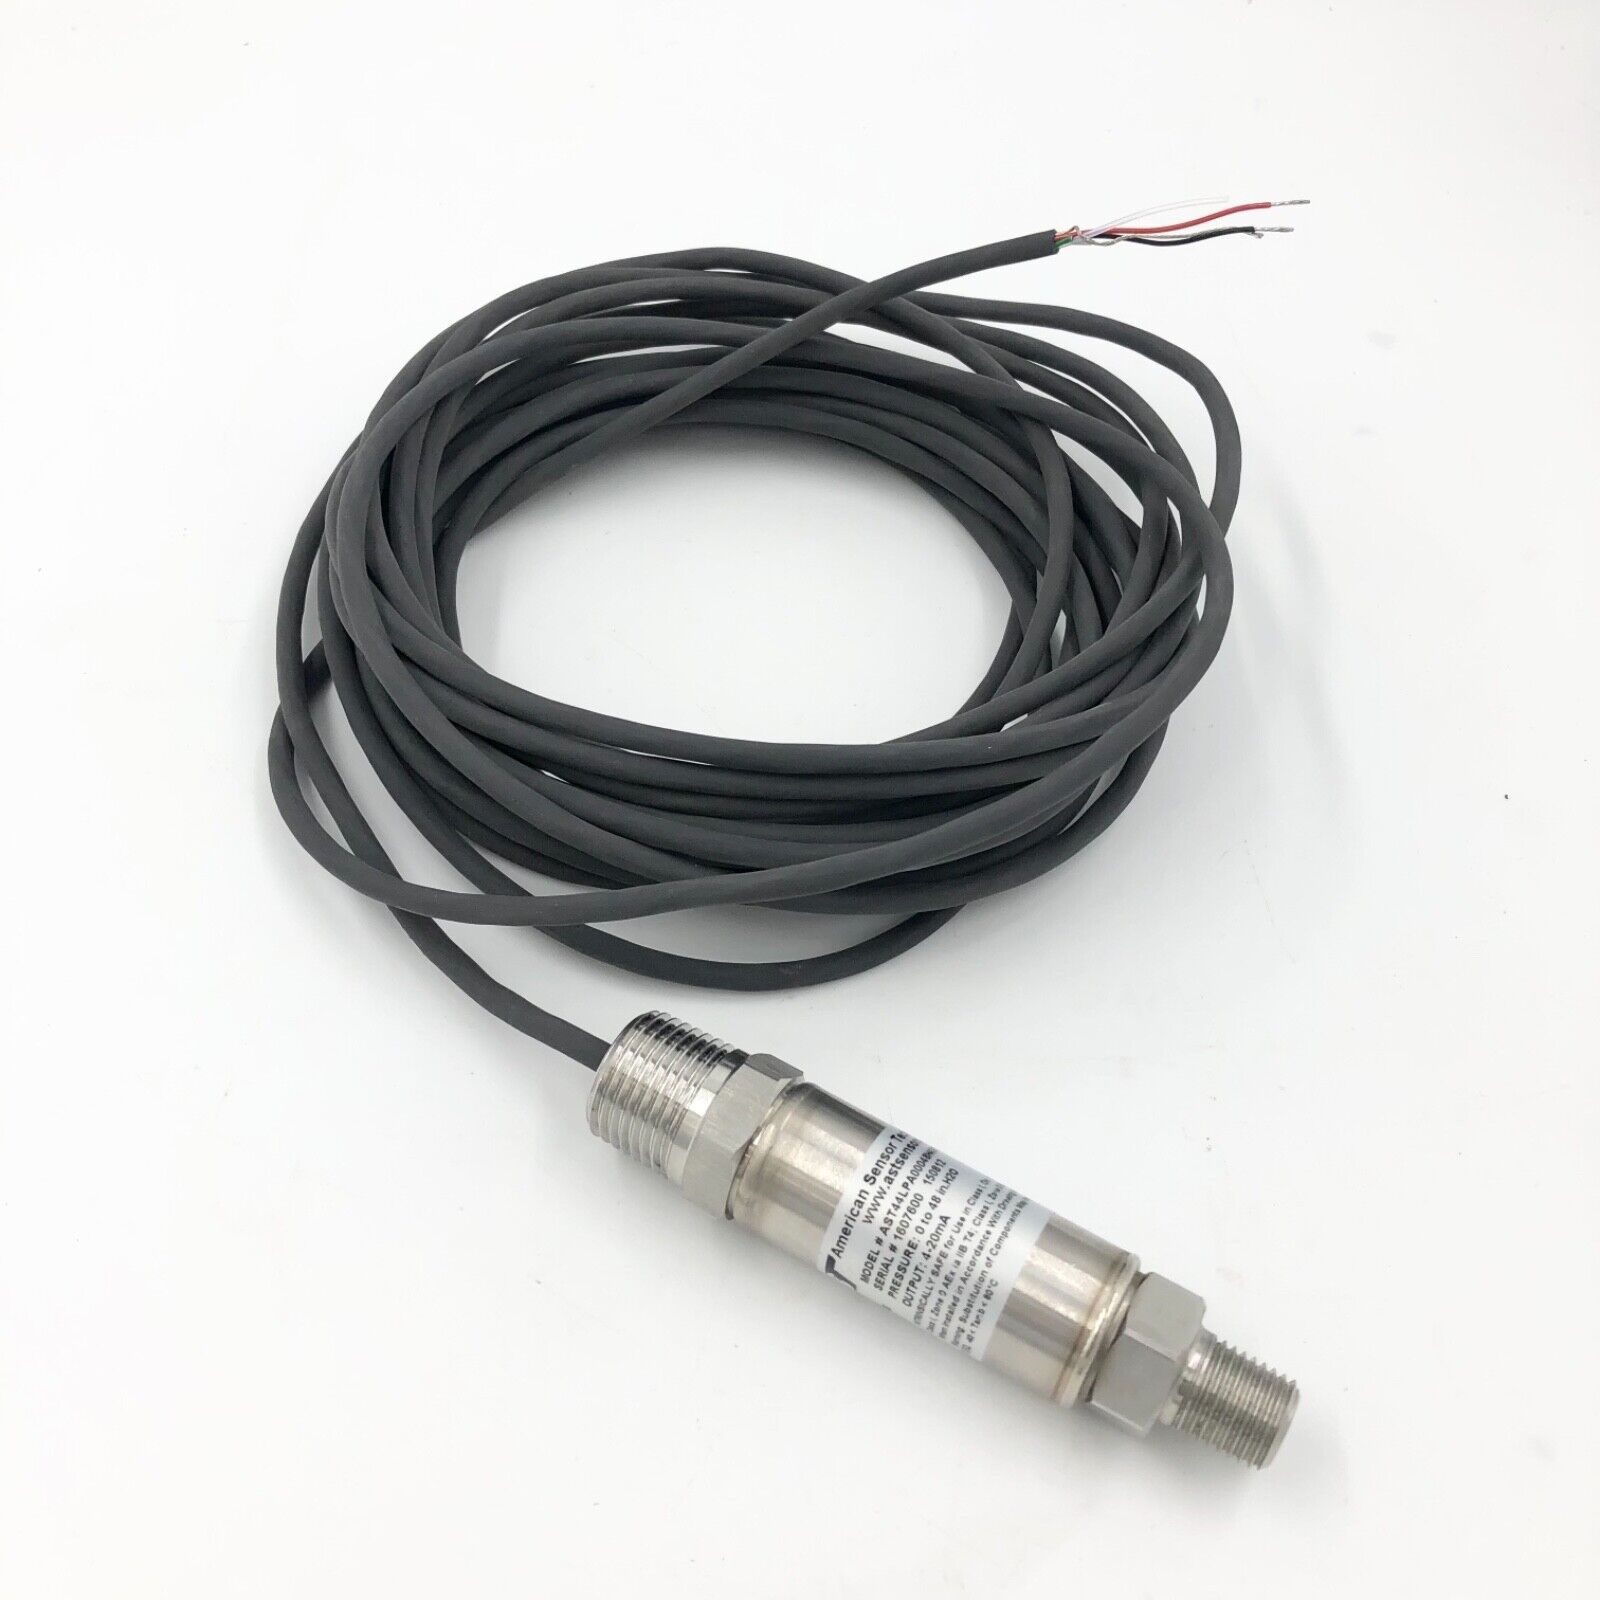 Tyco AST44LP Intrinsically Safe Low Pressure Transducer 0-48”H20 4-20mA 1/4” NPT